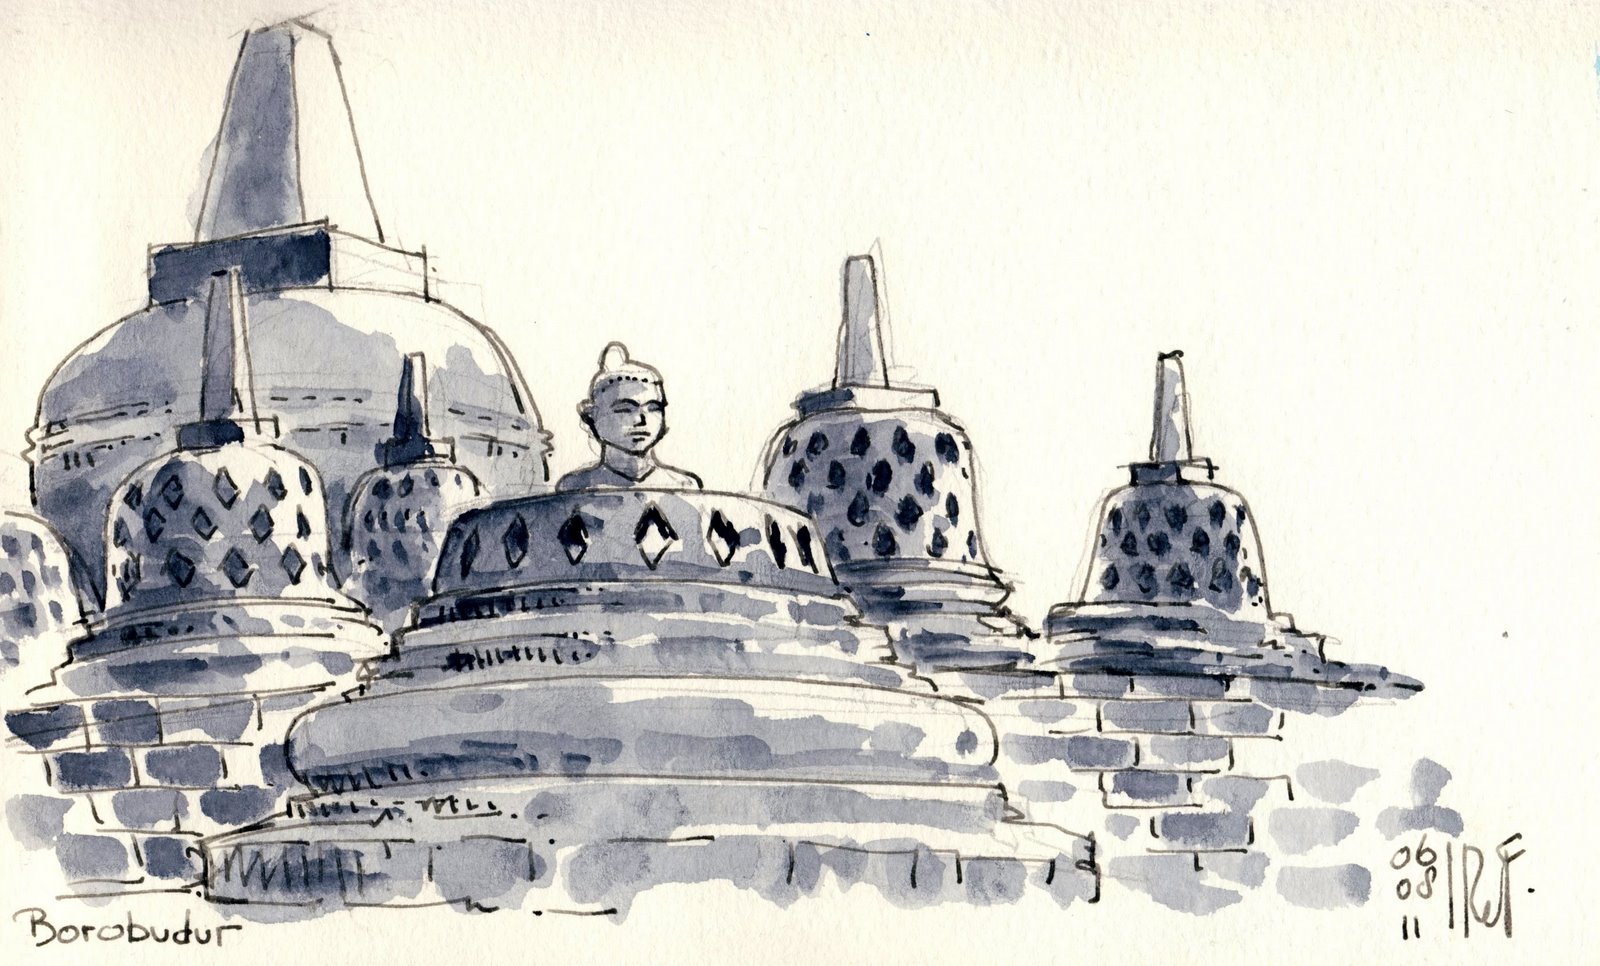 rene fijten Borobudur sketches: